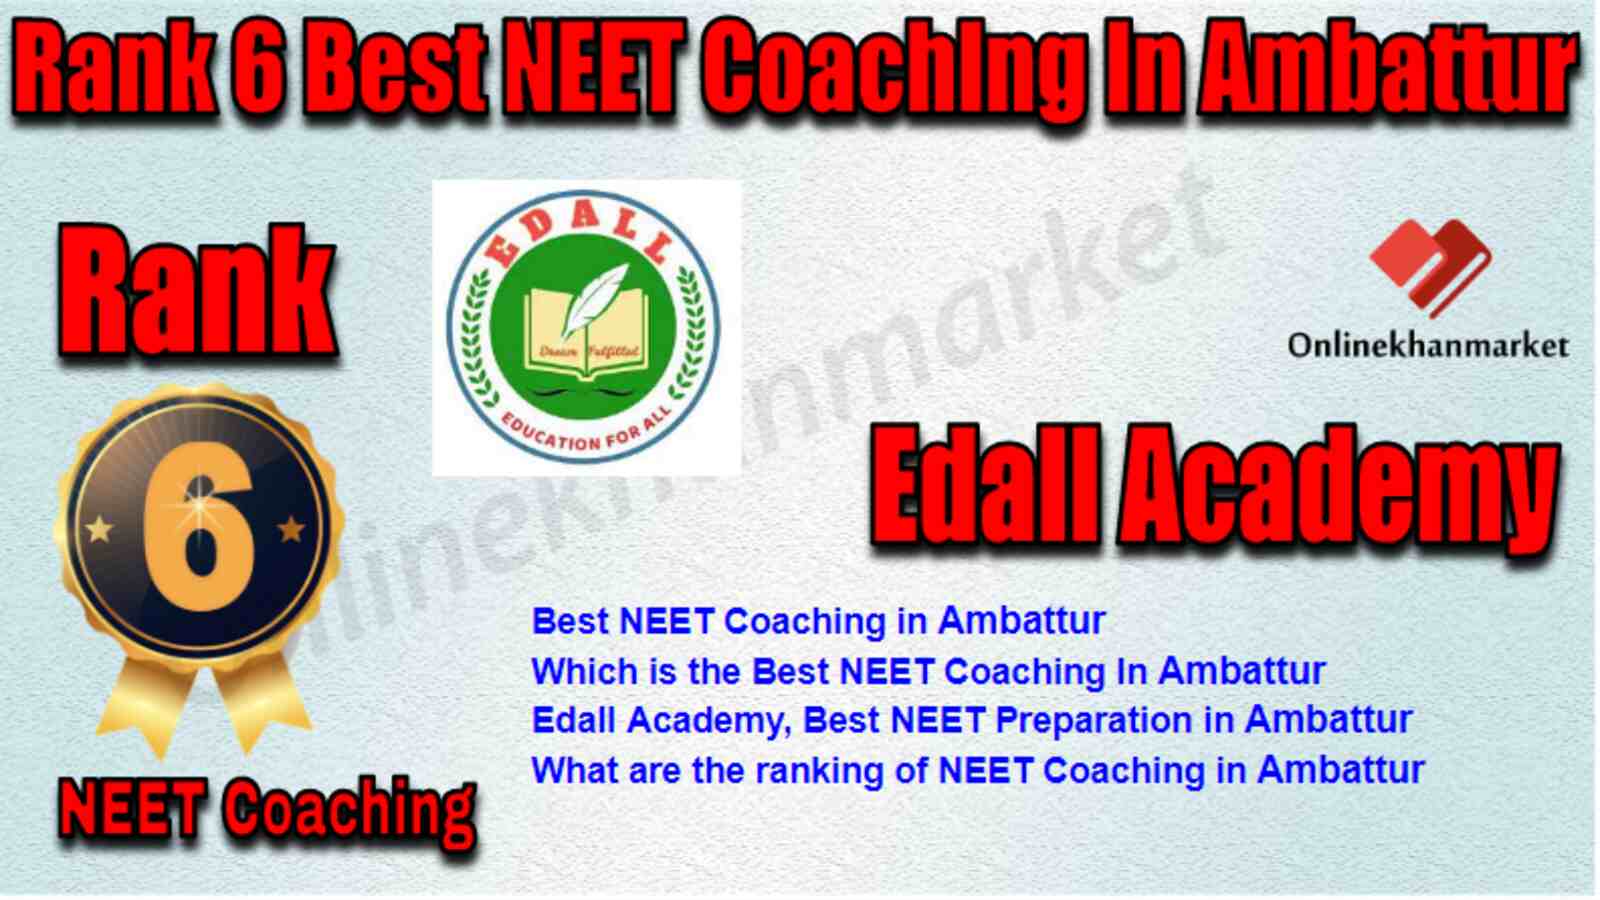 Rank 6 Best NEET Coaching in Ambattur